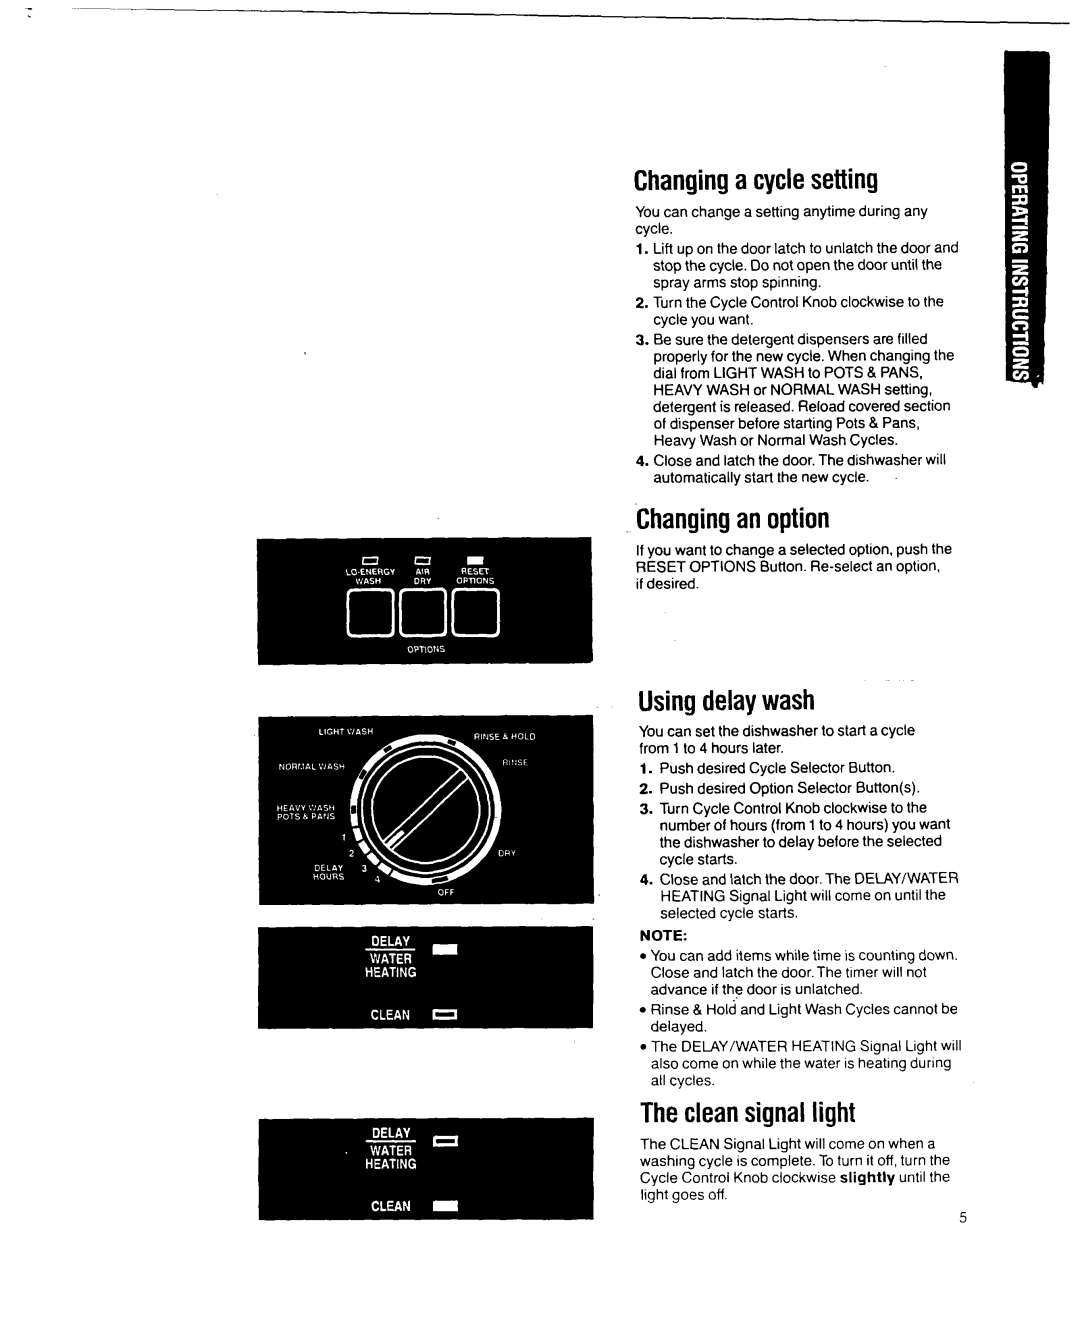 Whirlpool 8700 manual Changinga cyclesetting, Changingan option, Usingdelaywash, Theclean signal light 